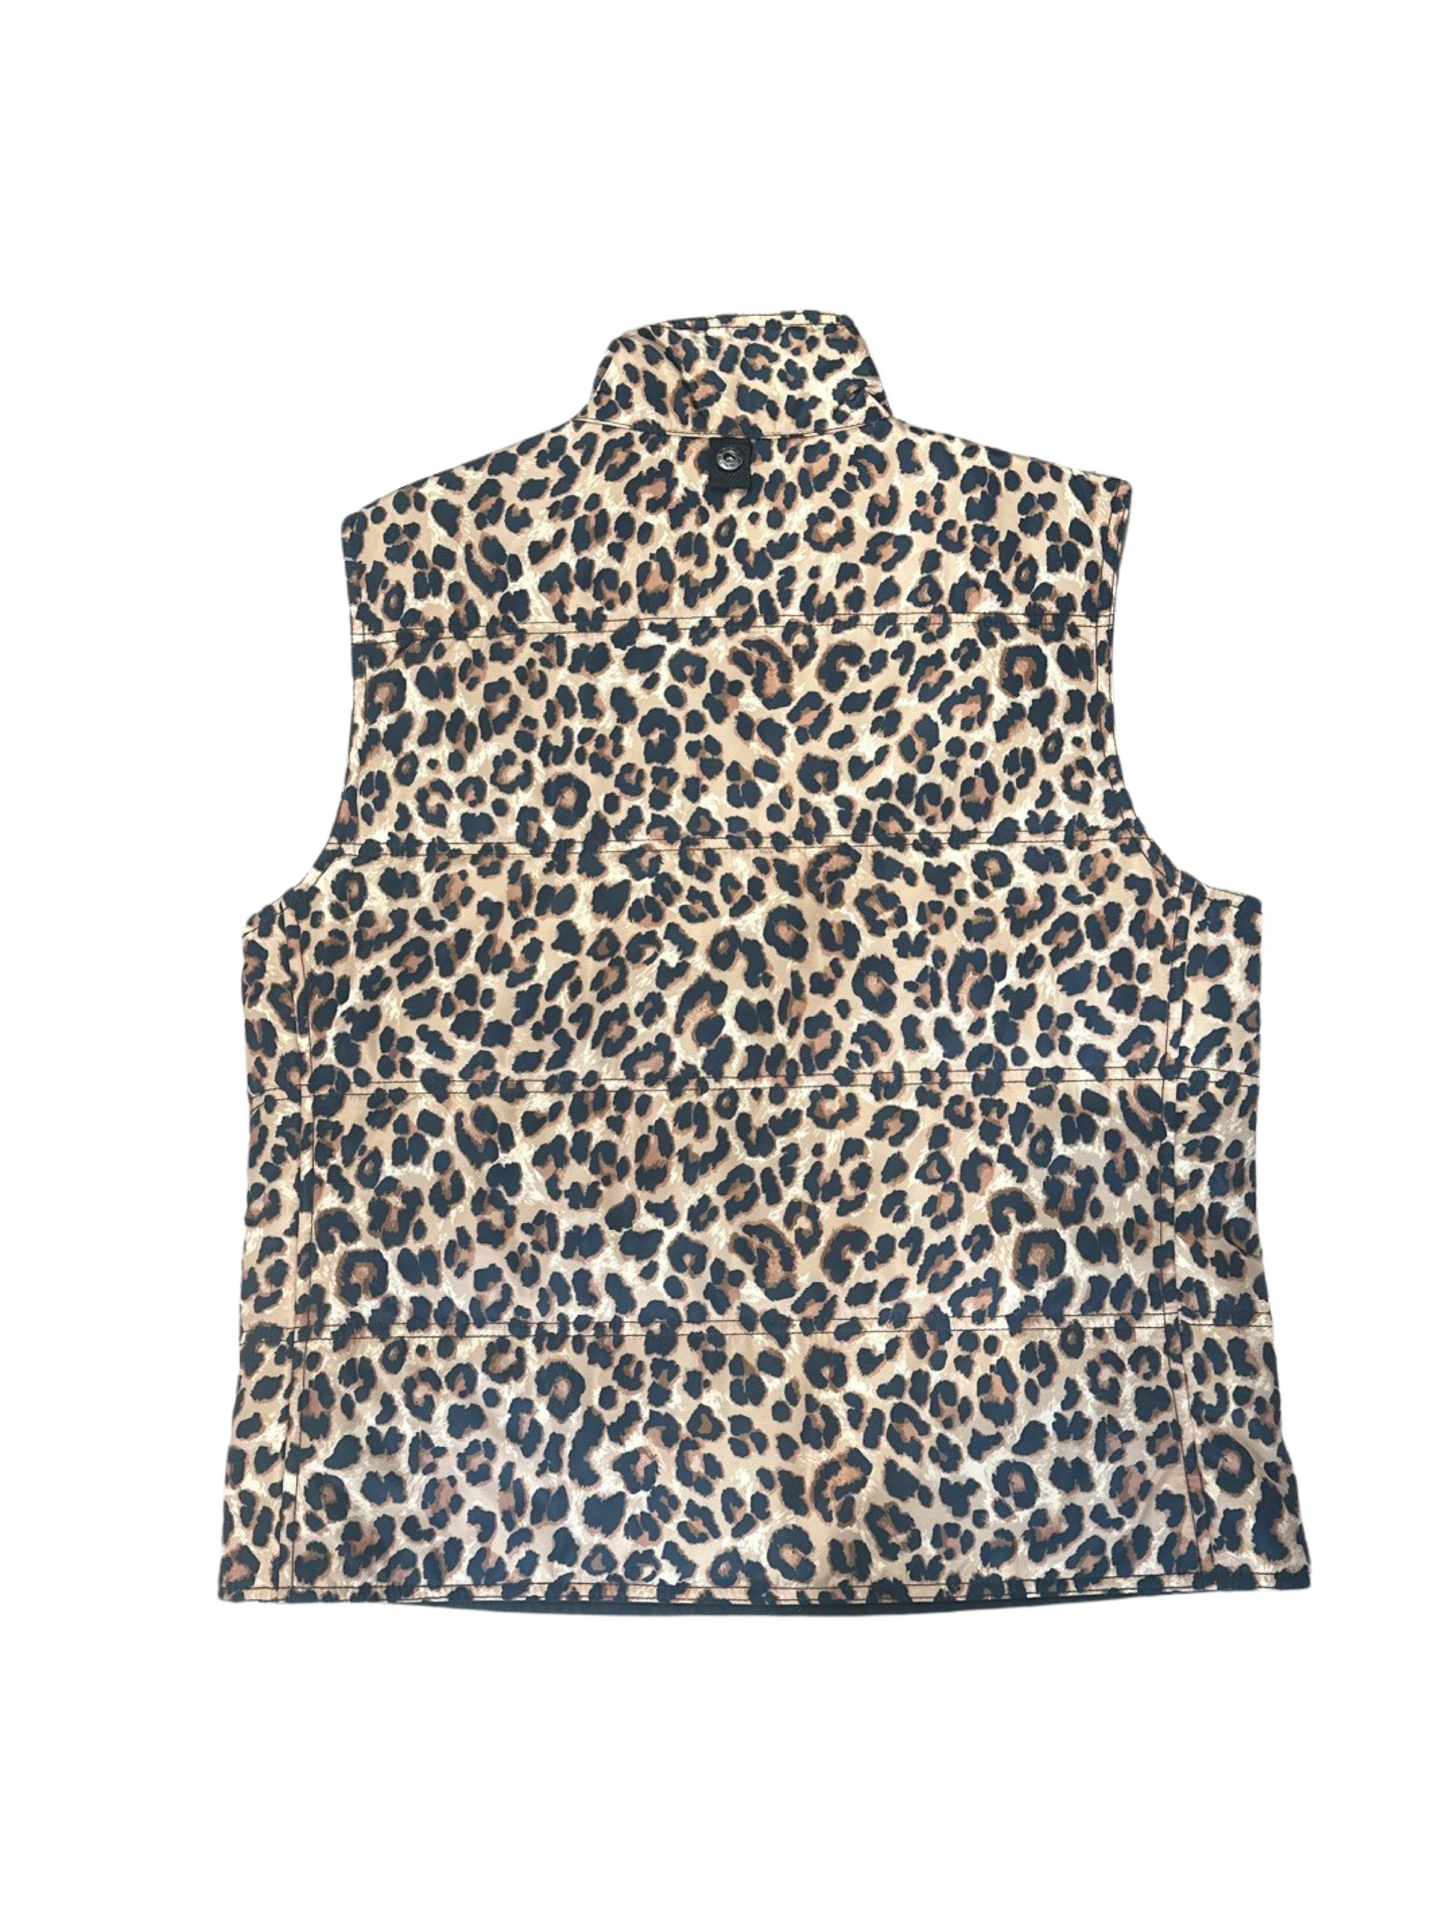 Veronica Beard Leopard Print Cushing Puffer Vest Size M